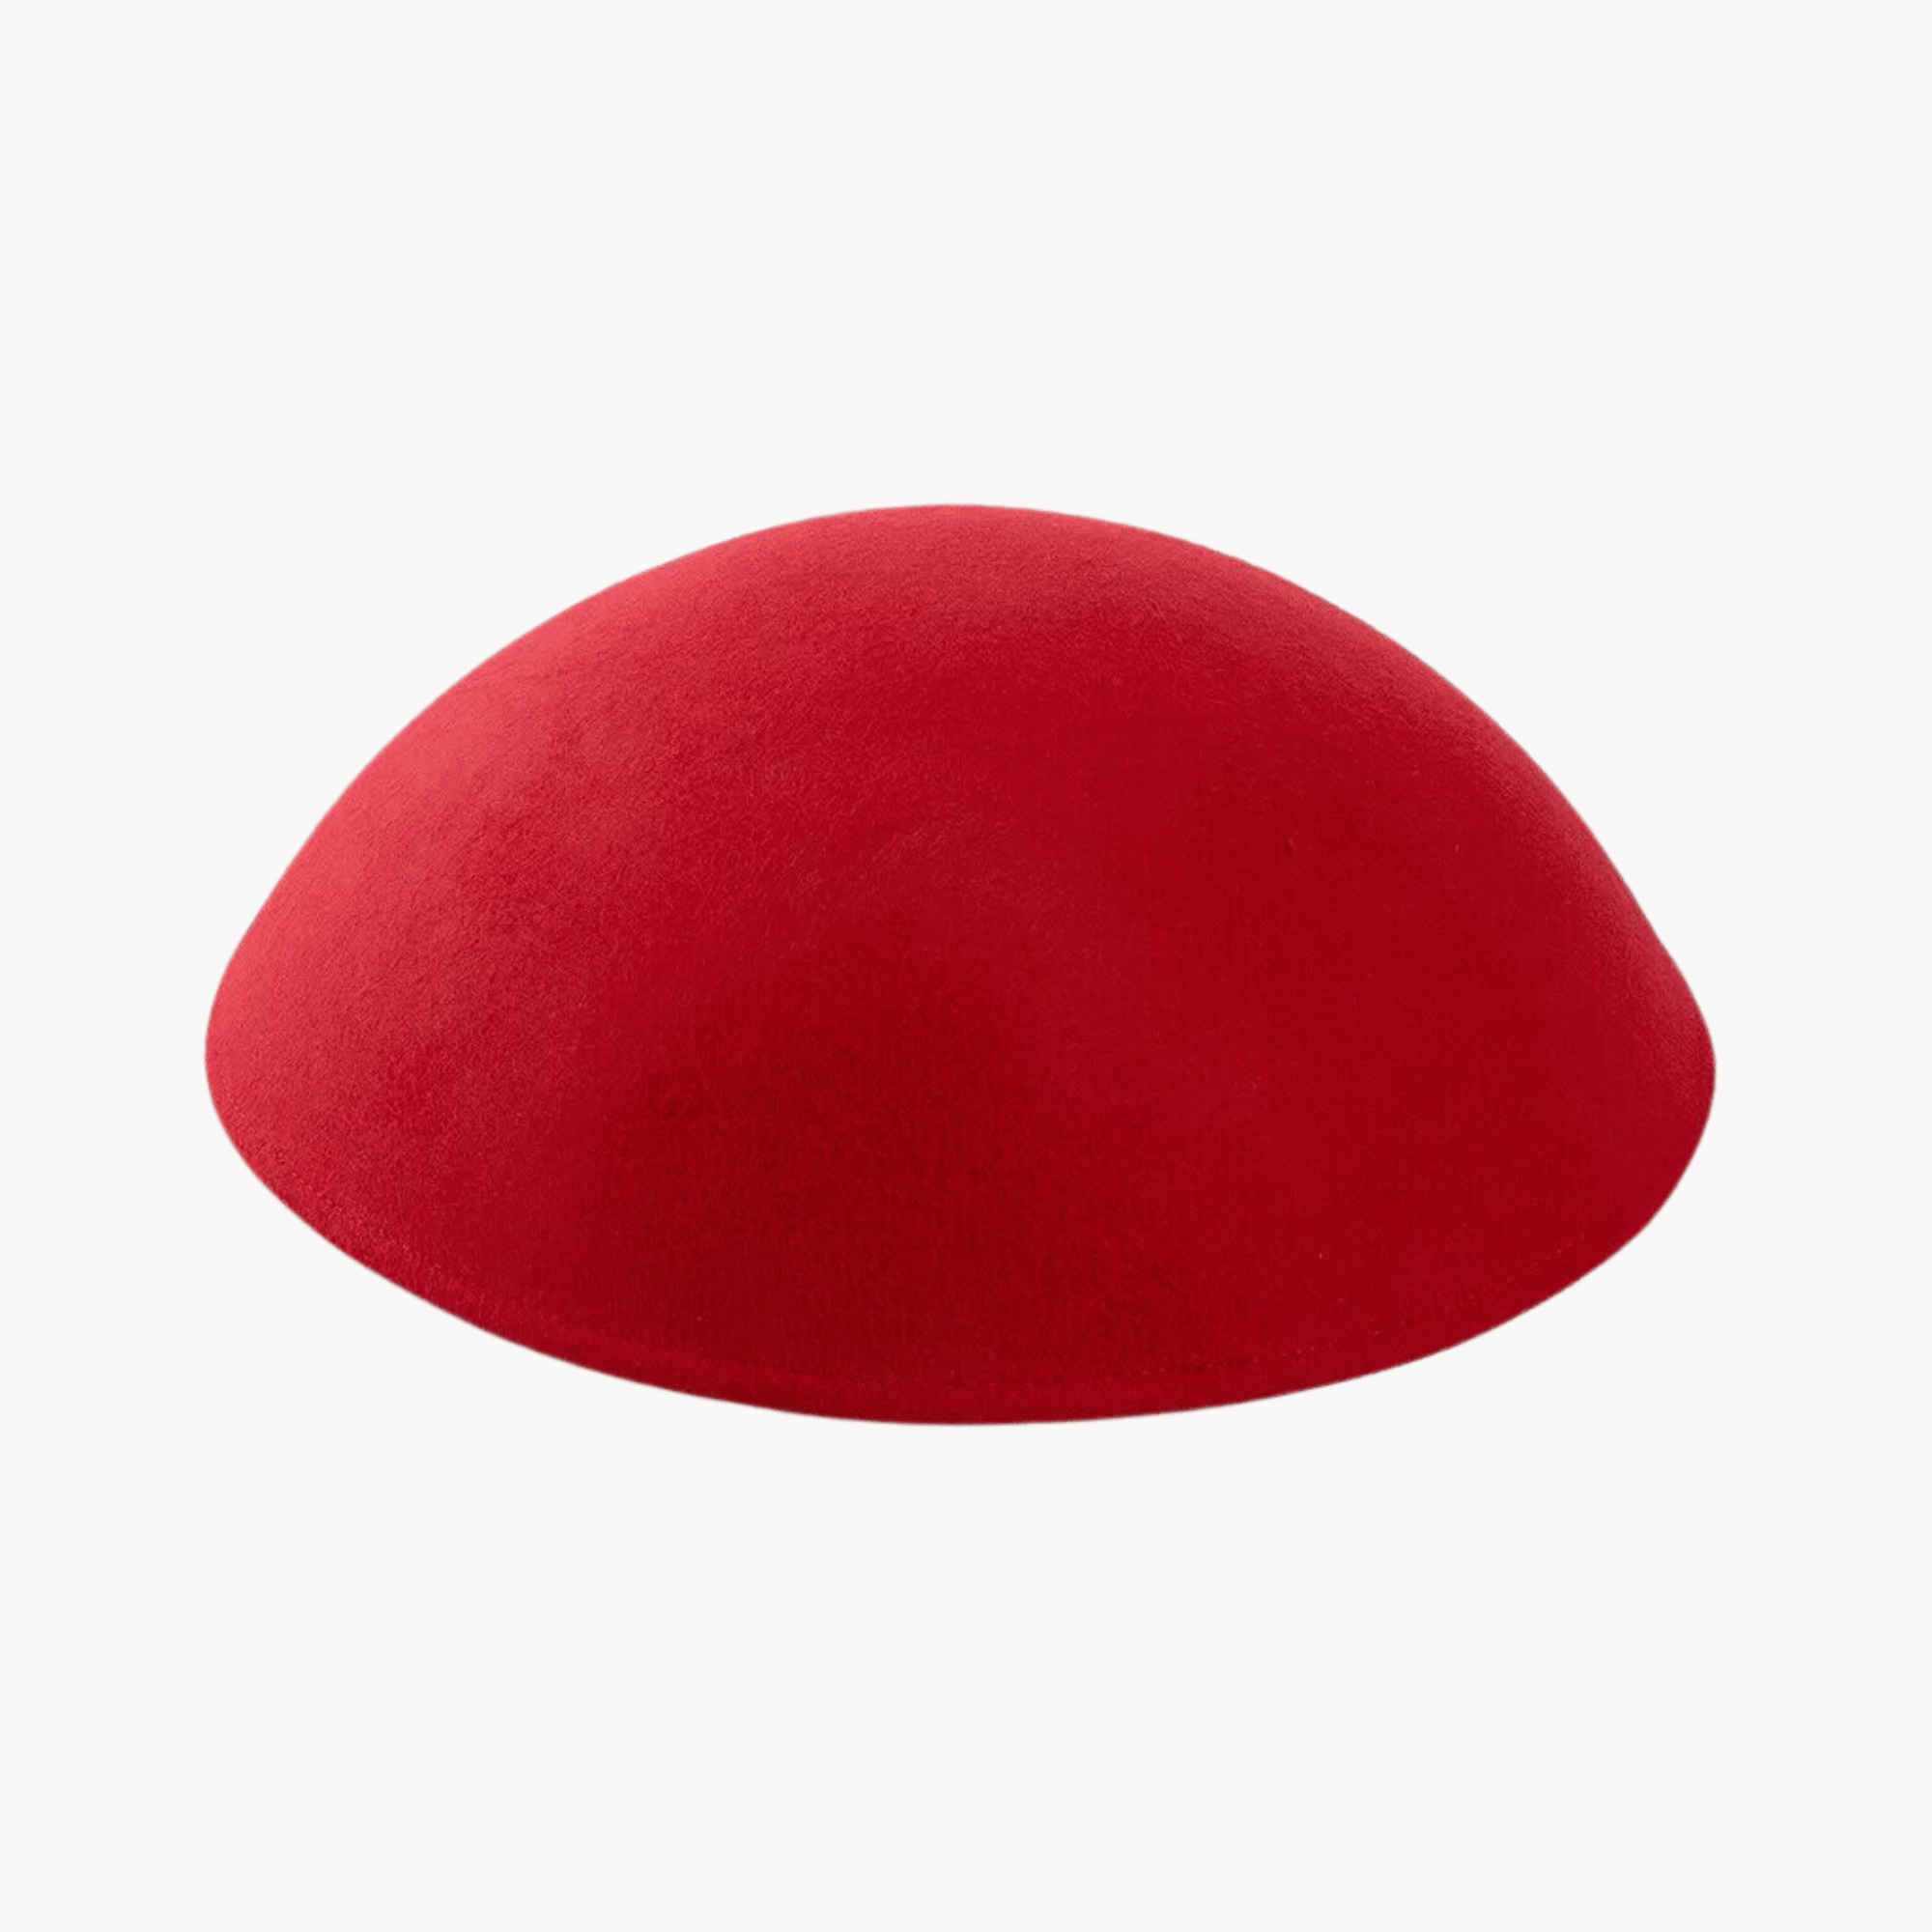 Large Dome Wool Felt Hat - Kelly Obi New York